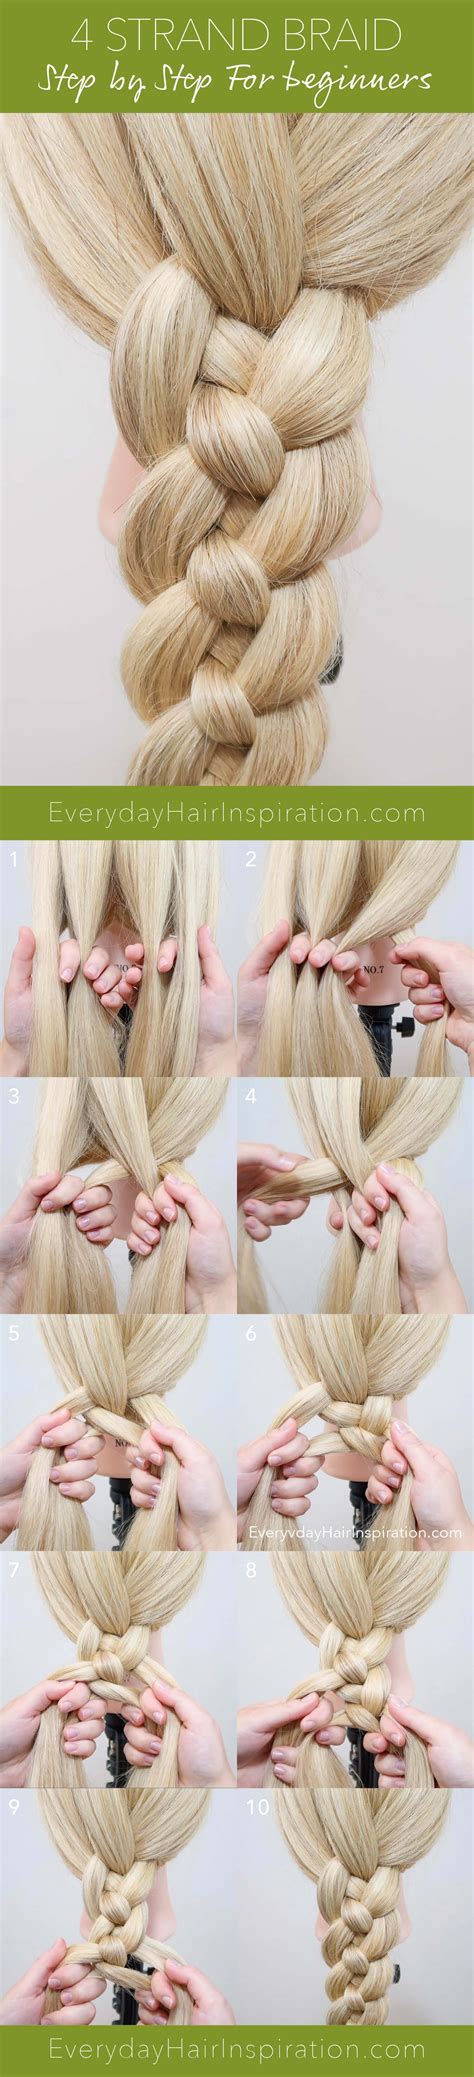 How to do a 4 strand braid or 4 strand plait. How To 4 Strand Braid - Everyday Hair inspiration ...